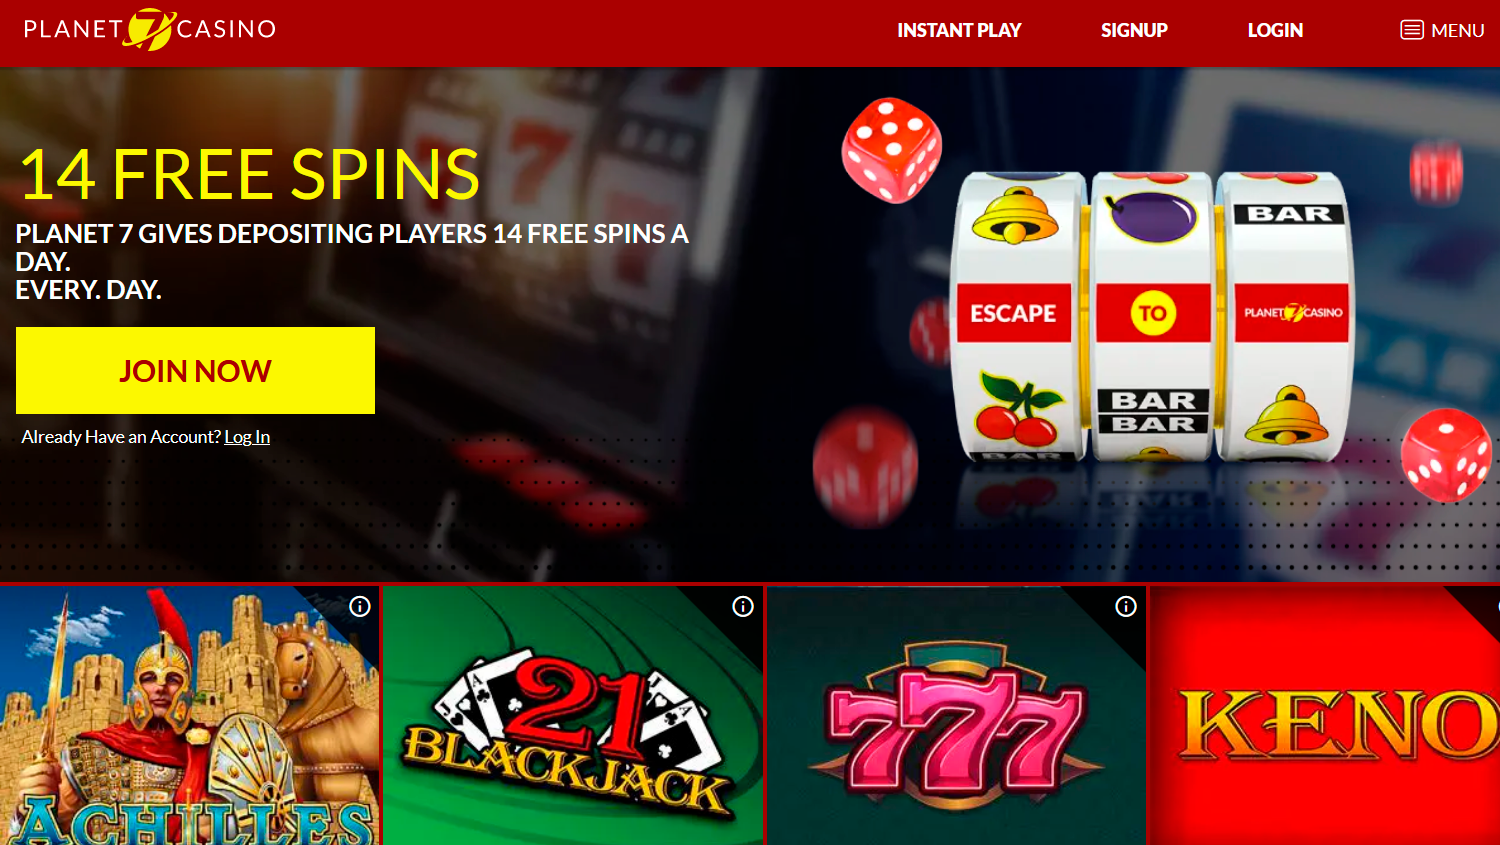 Planet 7 Oz casino screenshot of main page